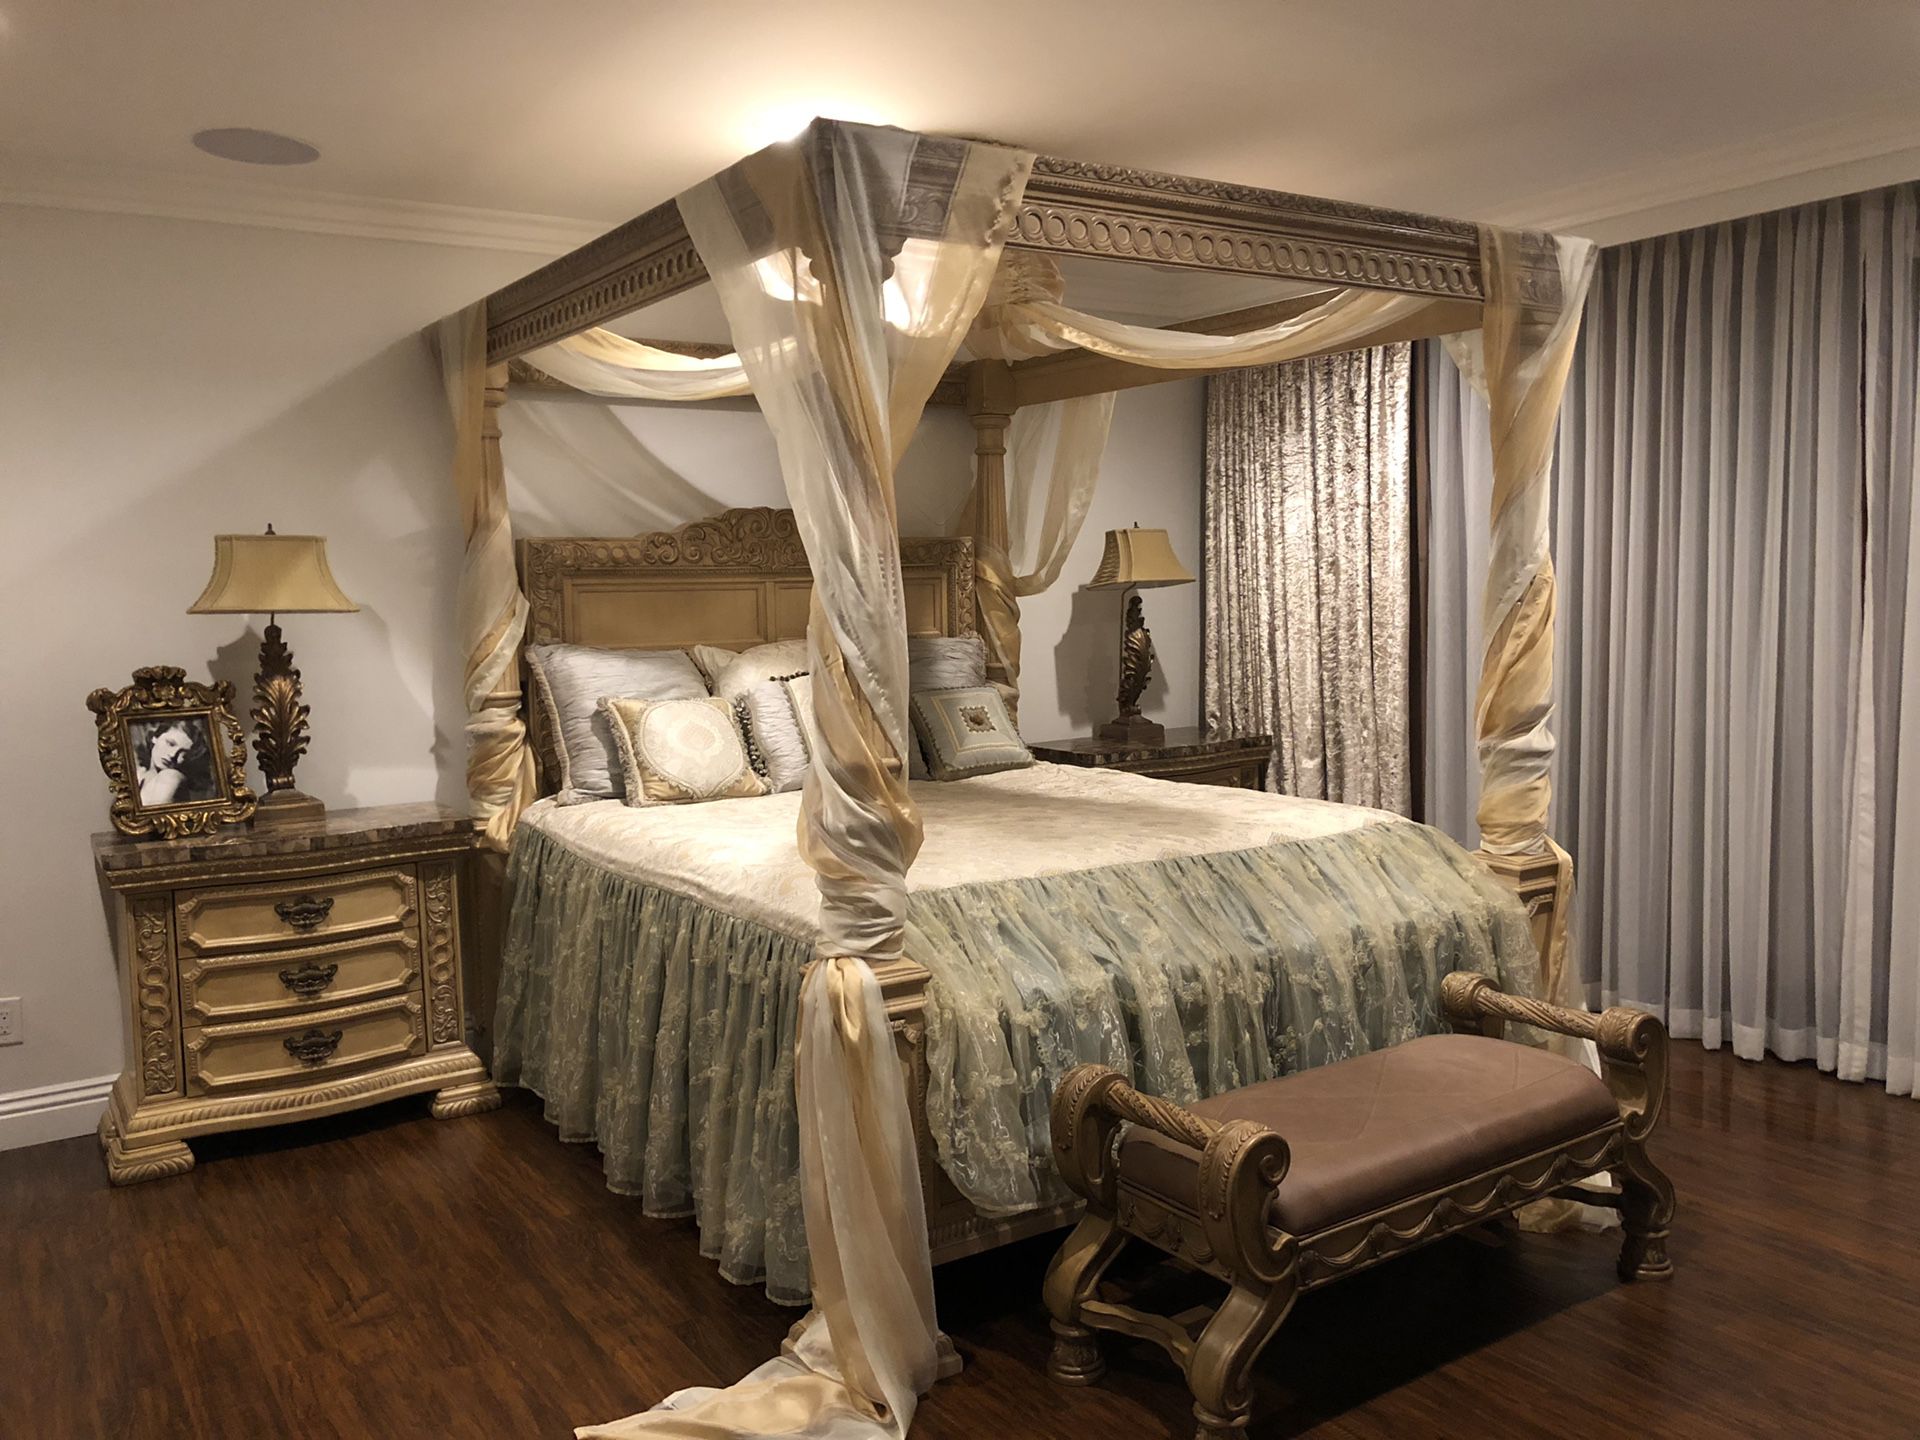 Luxury bedroom furniture set MSRP $8,000